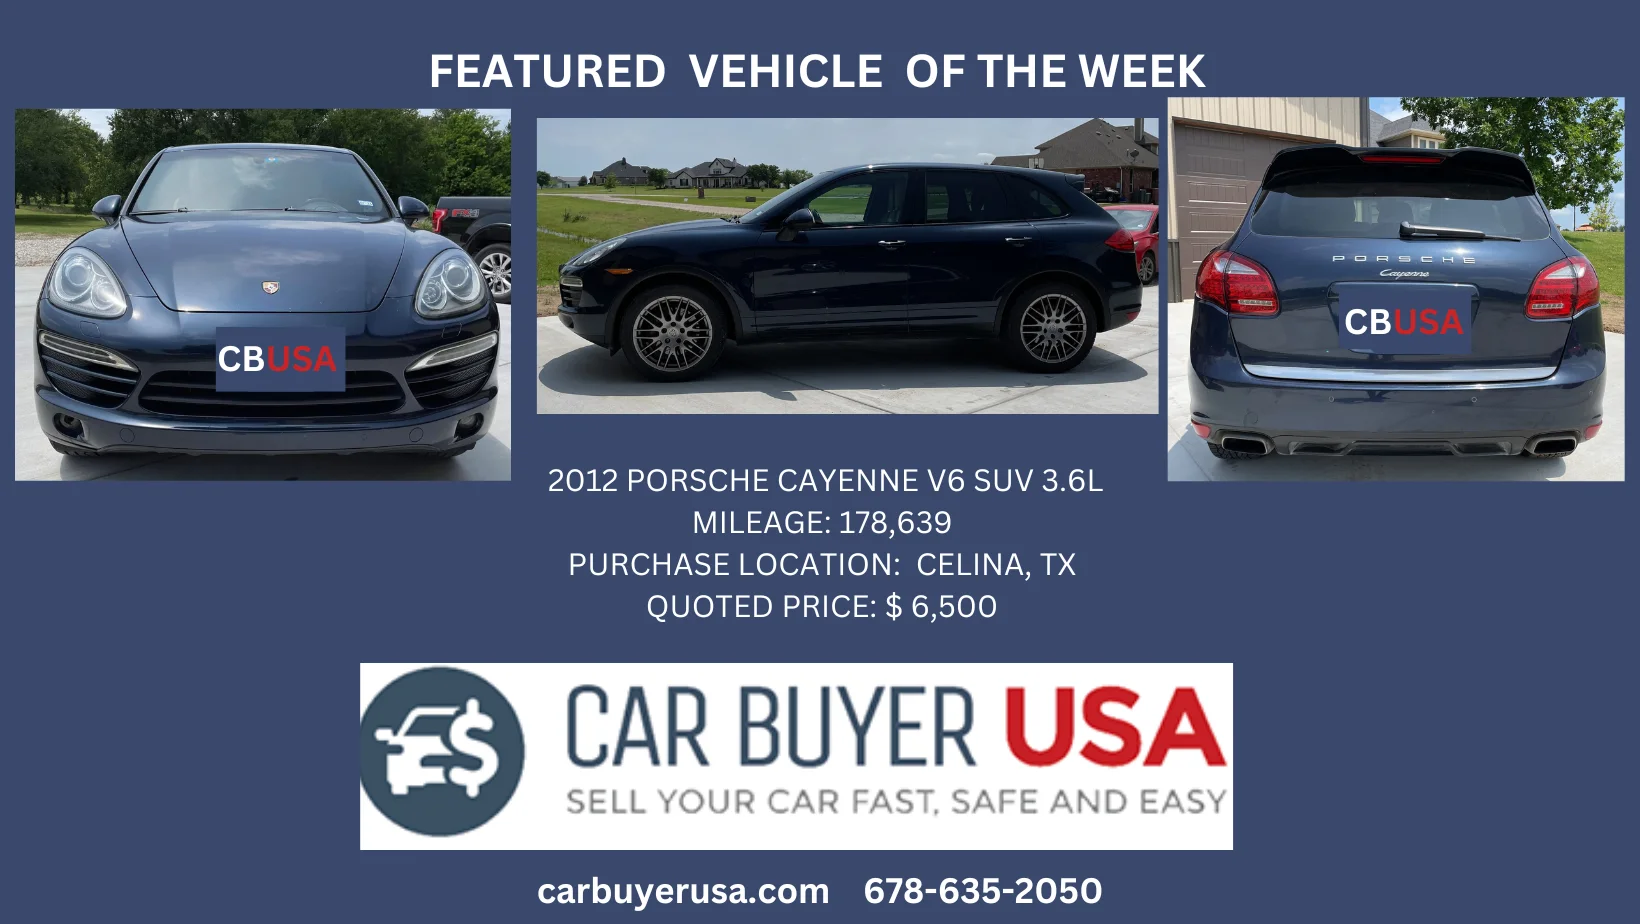 Car Buyer USA - 2012 Porsche Cayenne V6 4dr SUV 3.6L - $6,500